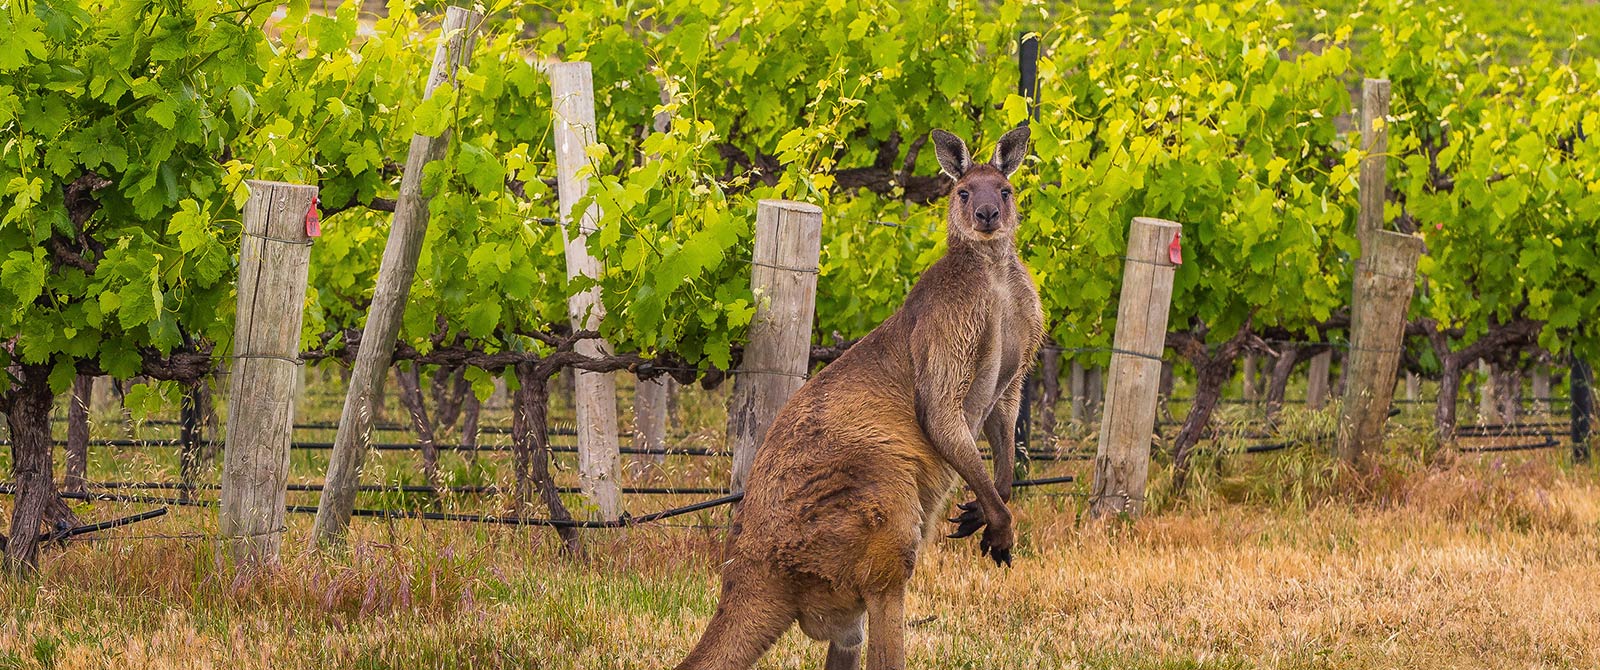 Kangaroo in a Vineyard in McLaren Vale, South Australia